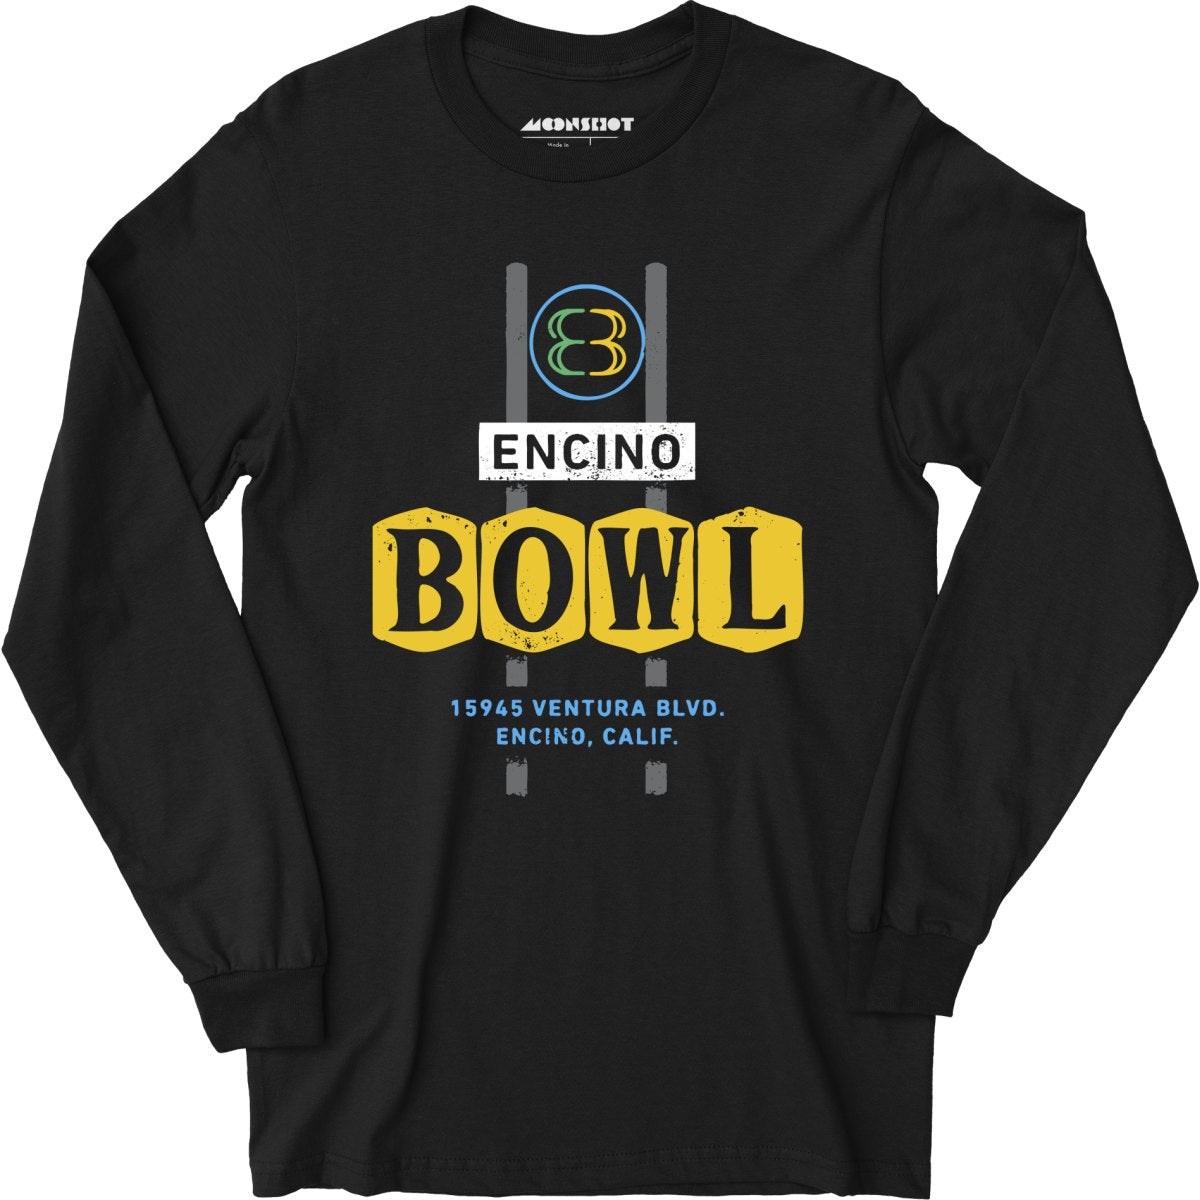 Encino Bowl - Encino, CA - Vintage Bowling Alley - Long Sleeve T-Shirt